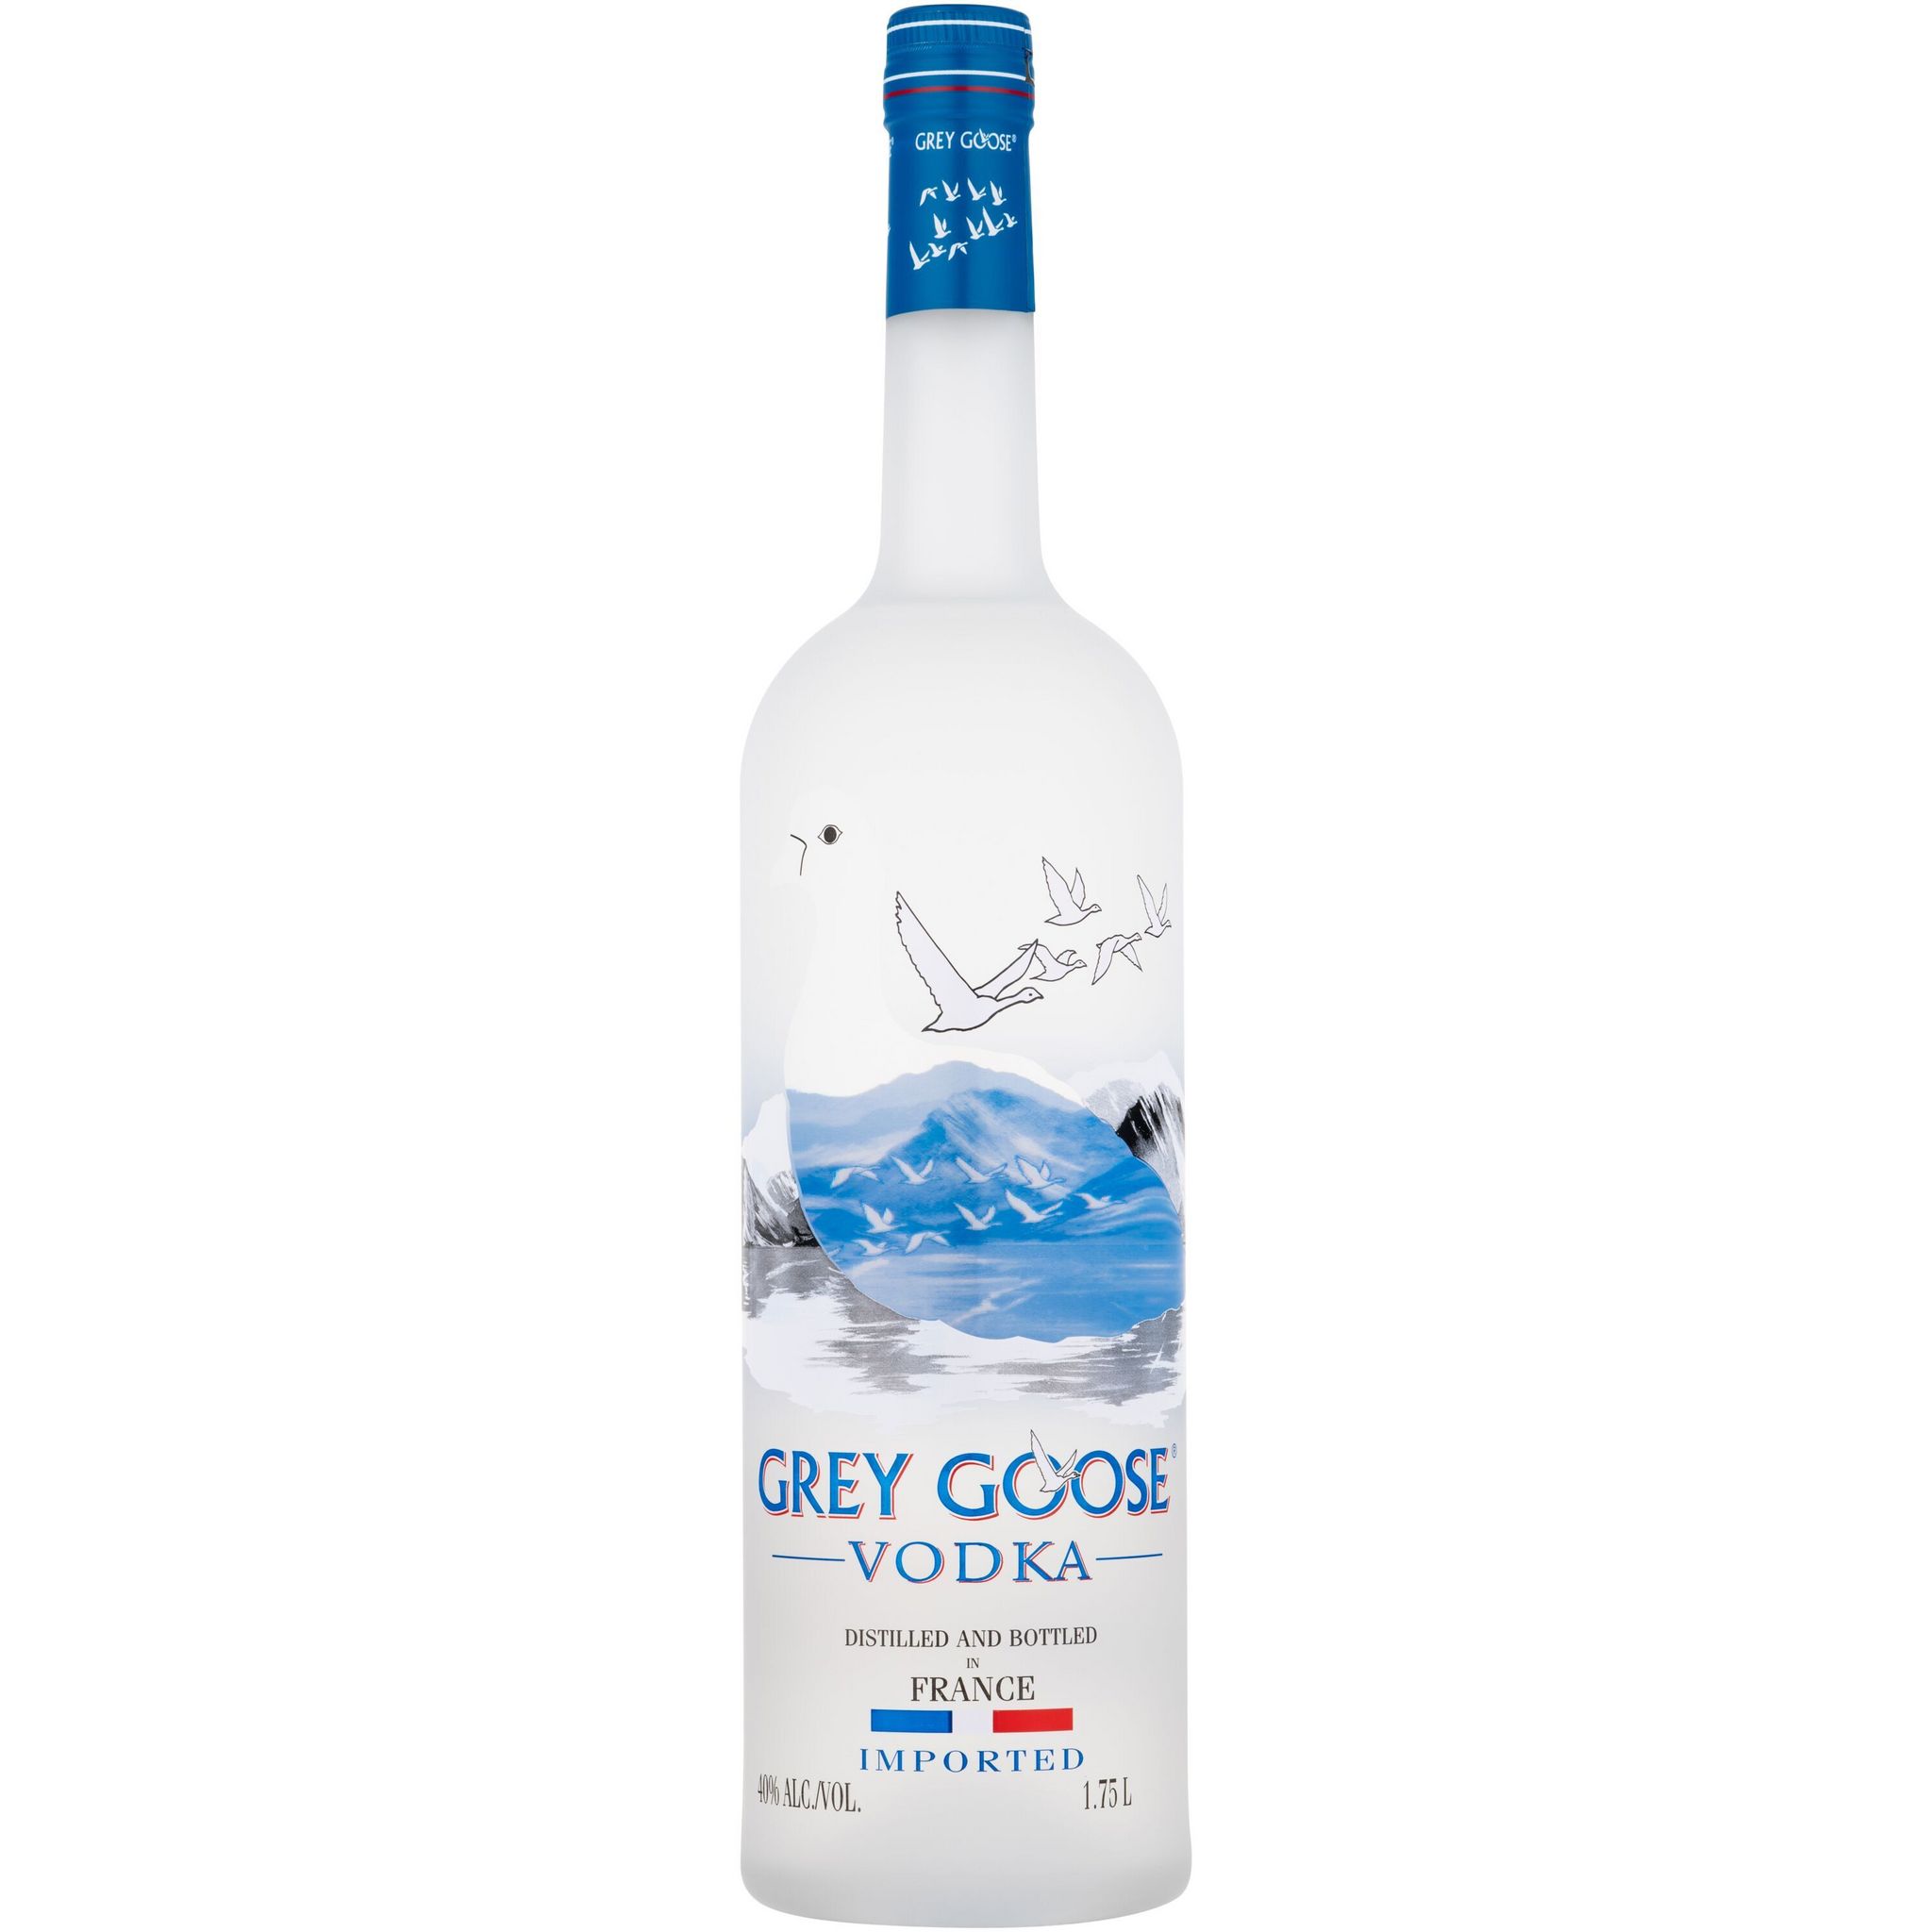 GREY GOOSE Vodka Originale 40% 1.75 pas cher 